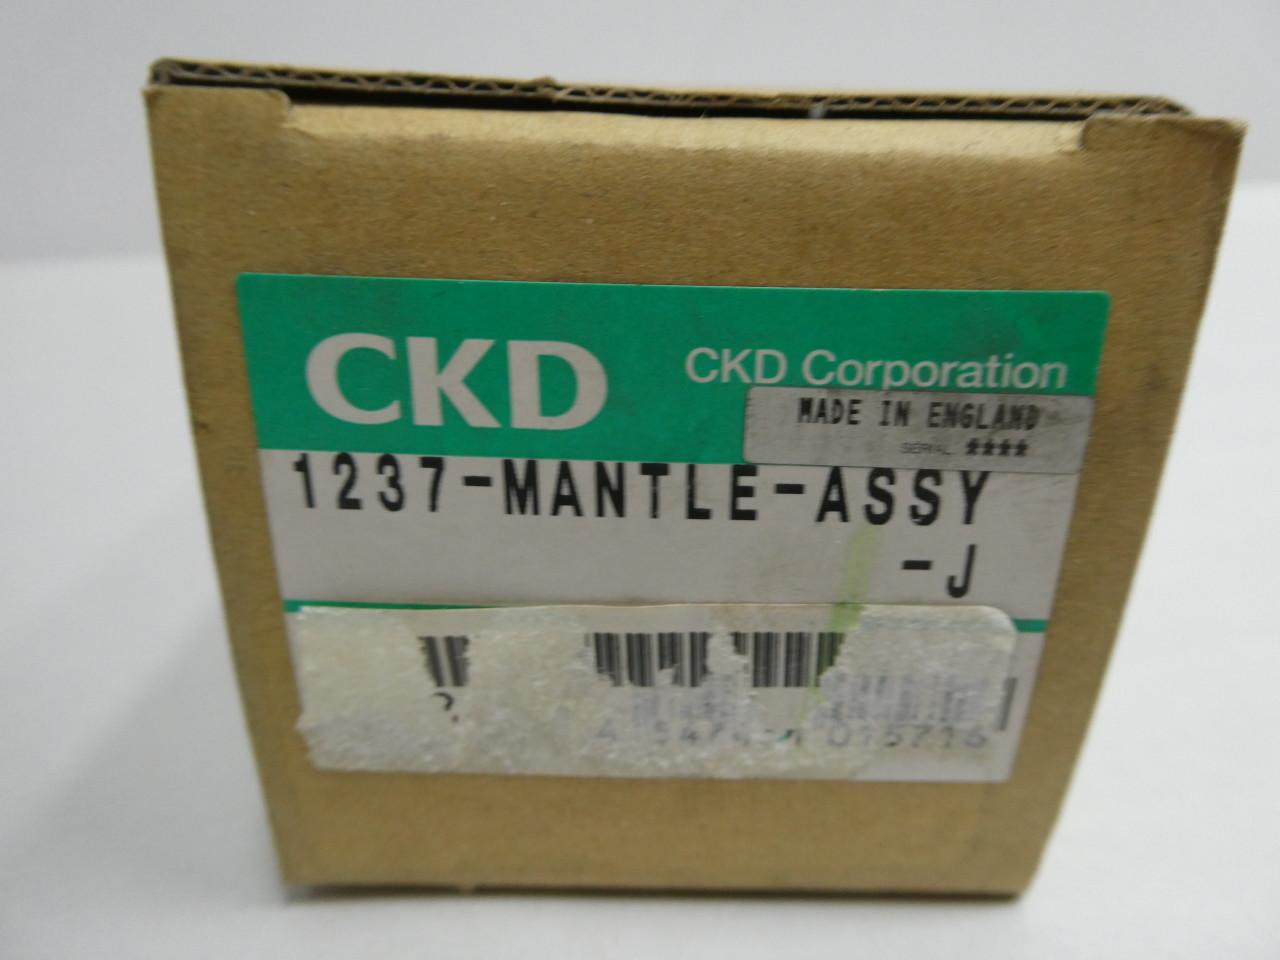 Ckd 1237-MANTLE-ASSY-J Pneumatic Filter Element